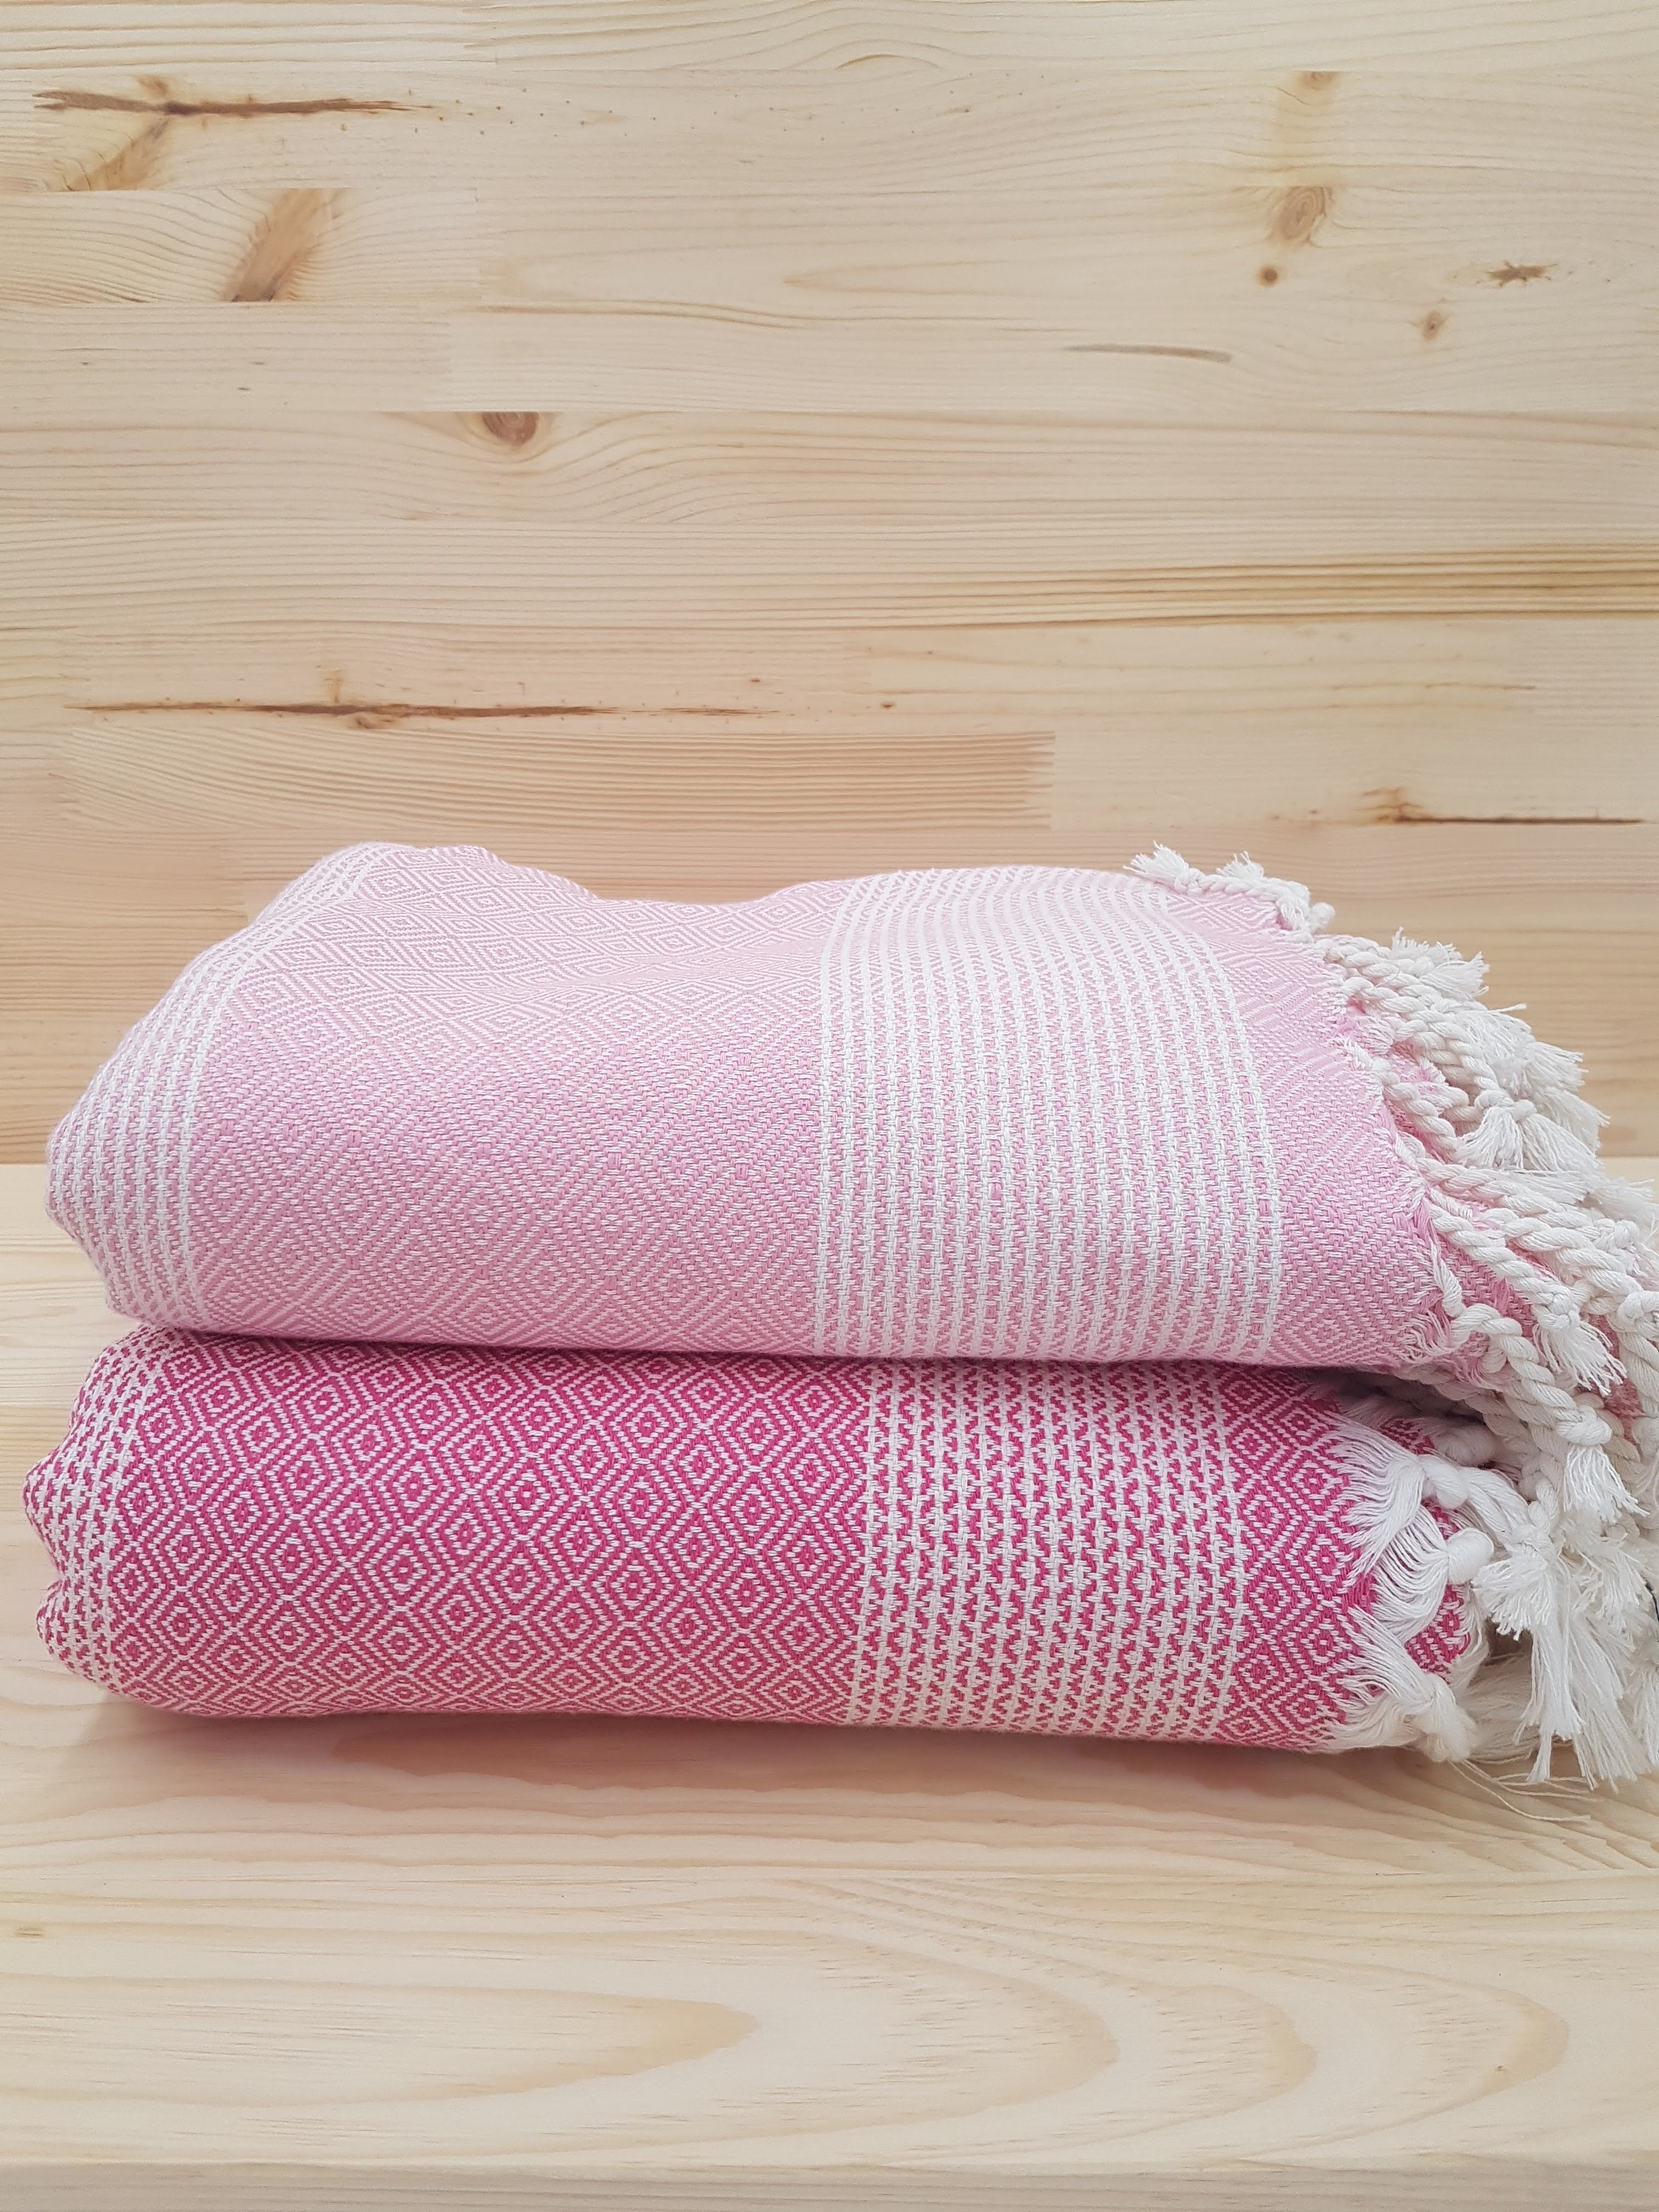 Nordic Series Bed Throw, Hand-loomed Twin Bedspread, Blanket - 150*200cm (59"x78")